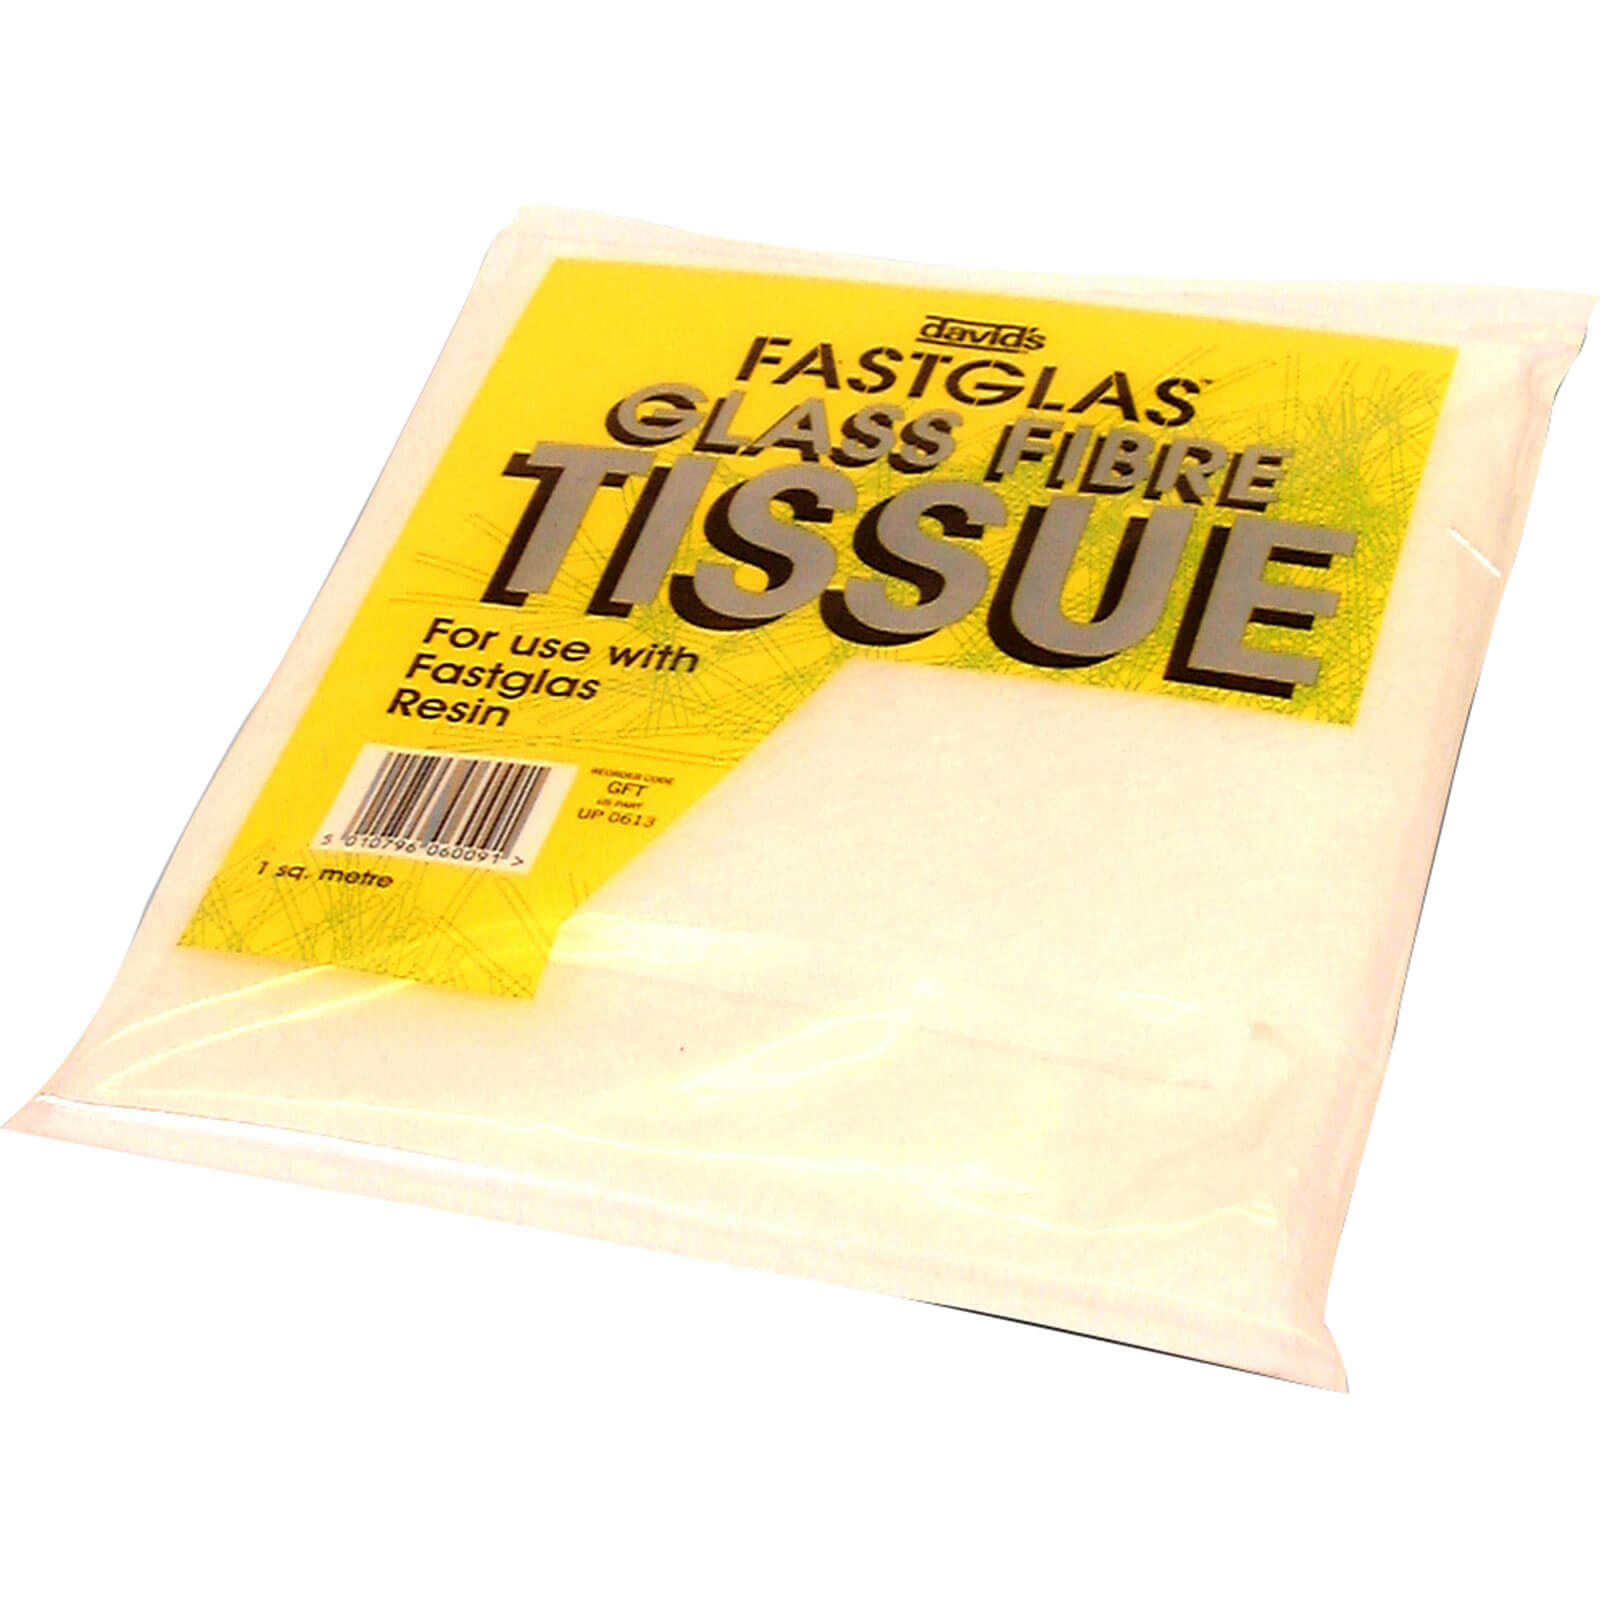 UPO Fastglas Tissue 1 M2